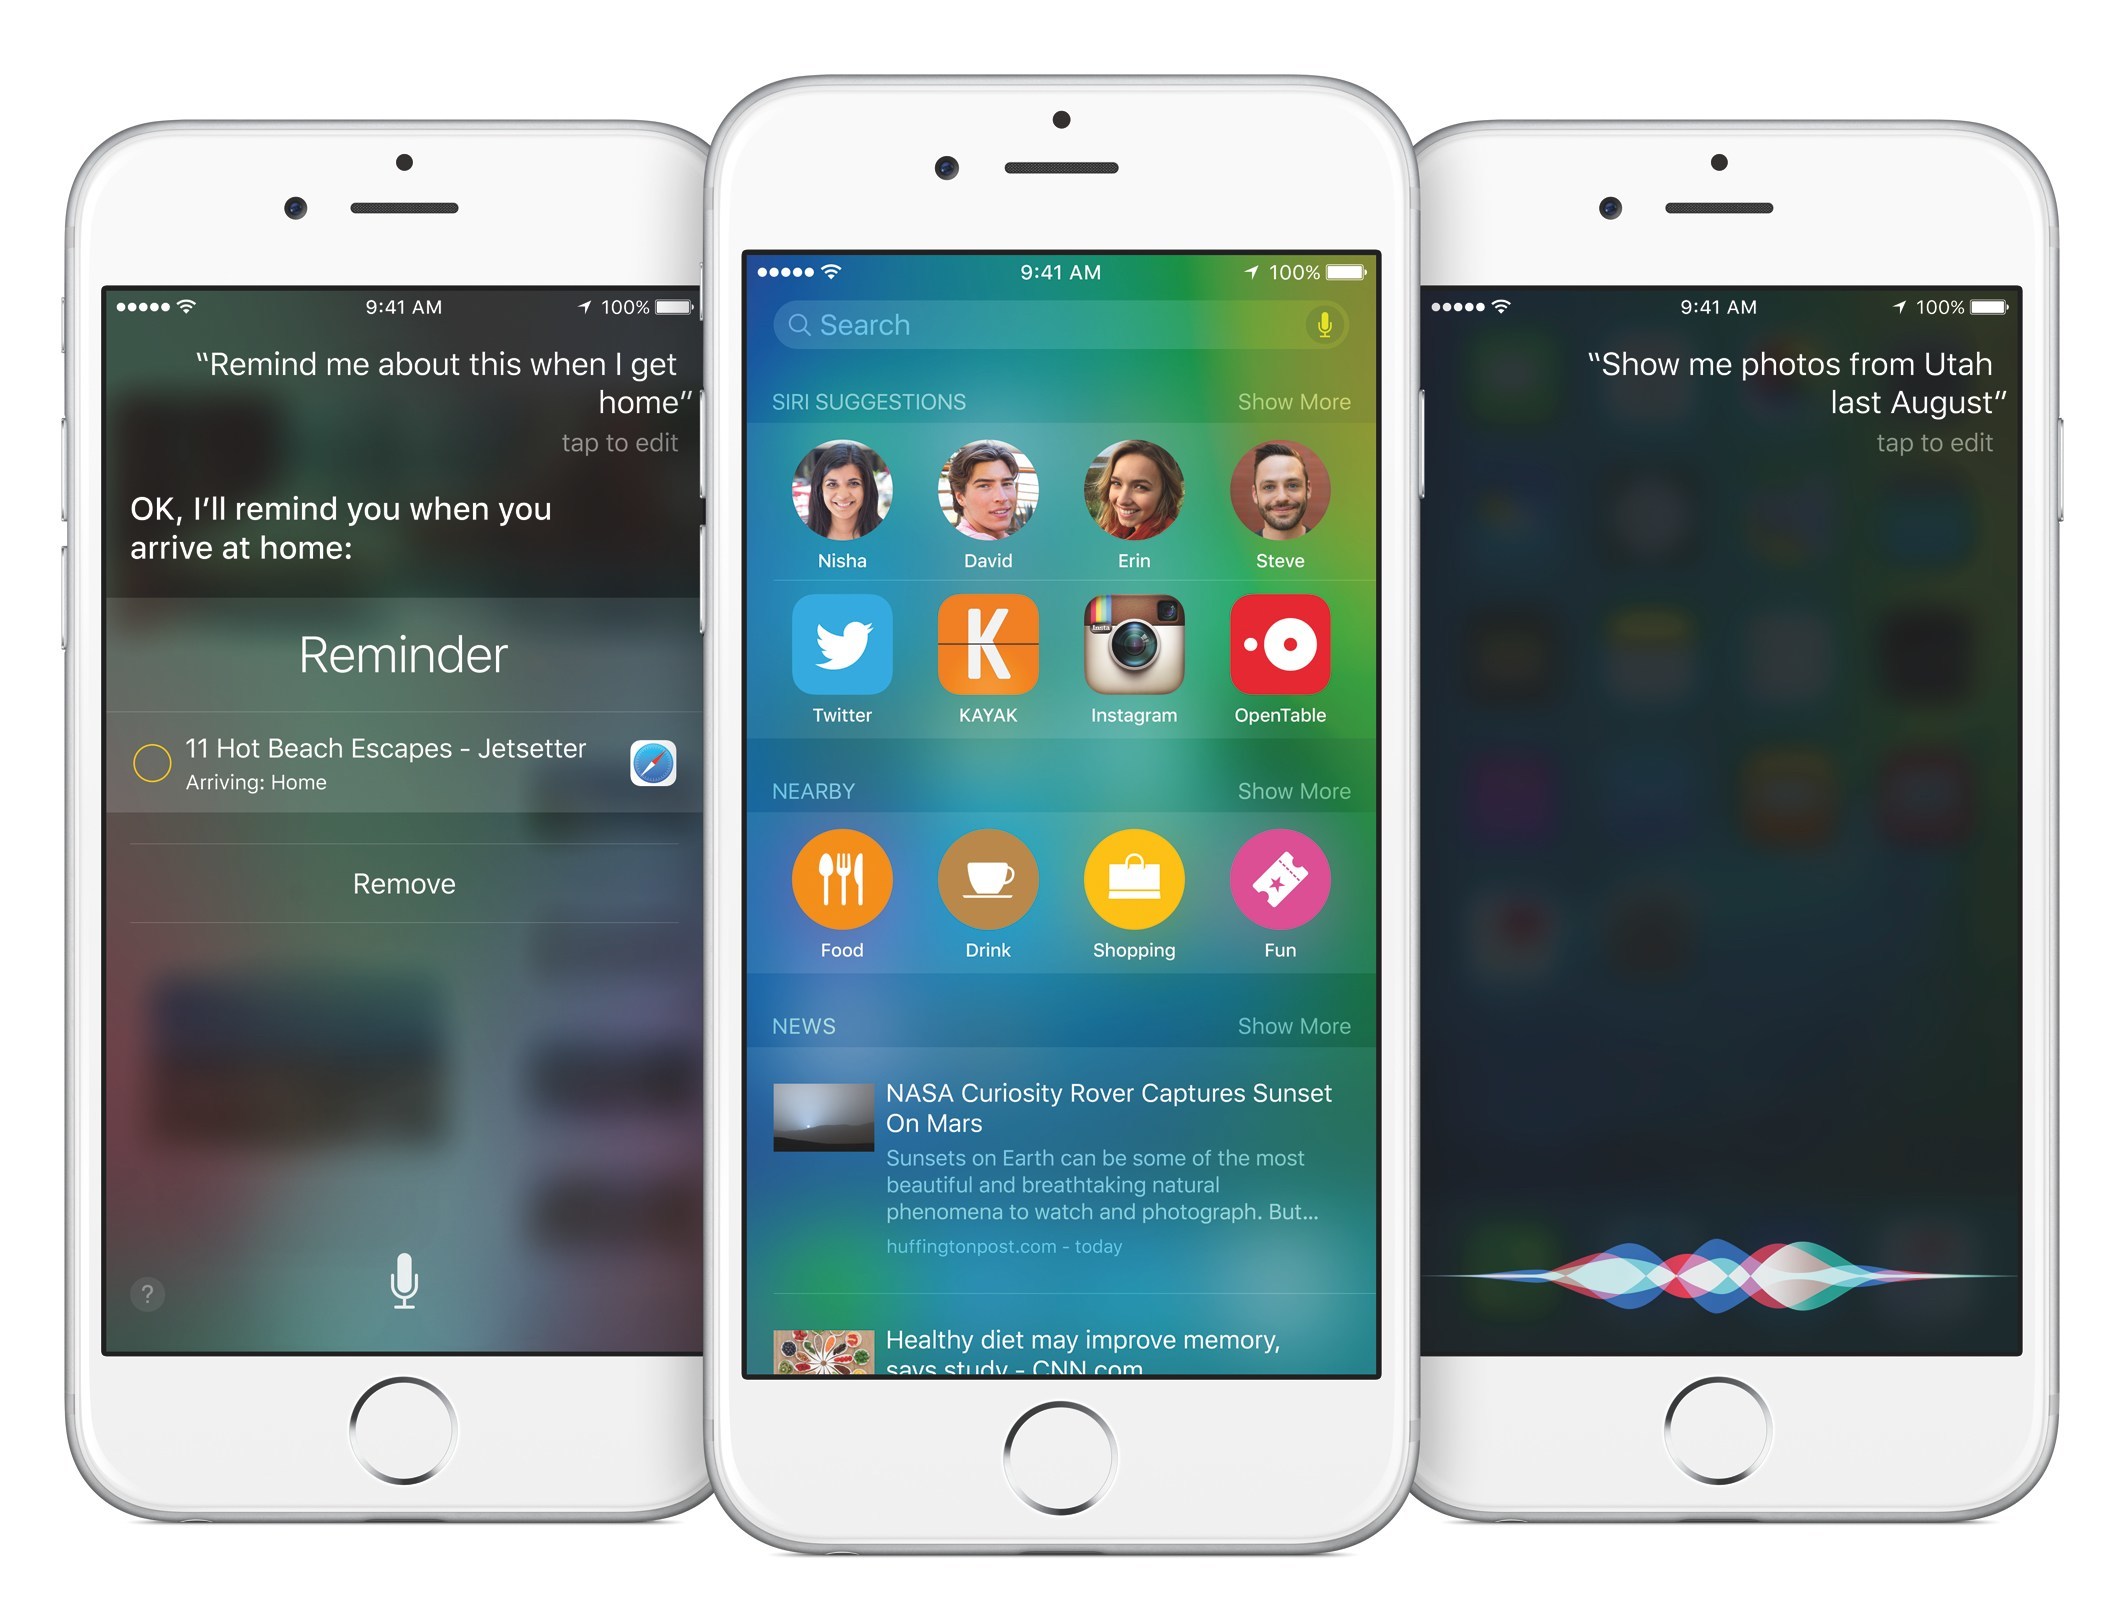 iOS 9 станет доступна для загрузки 16 сентября